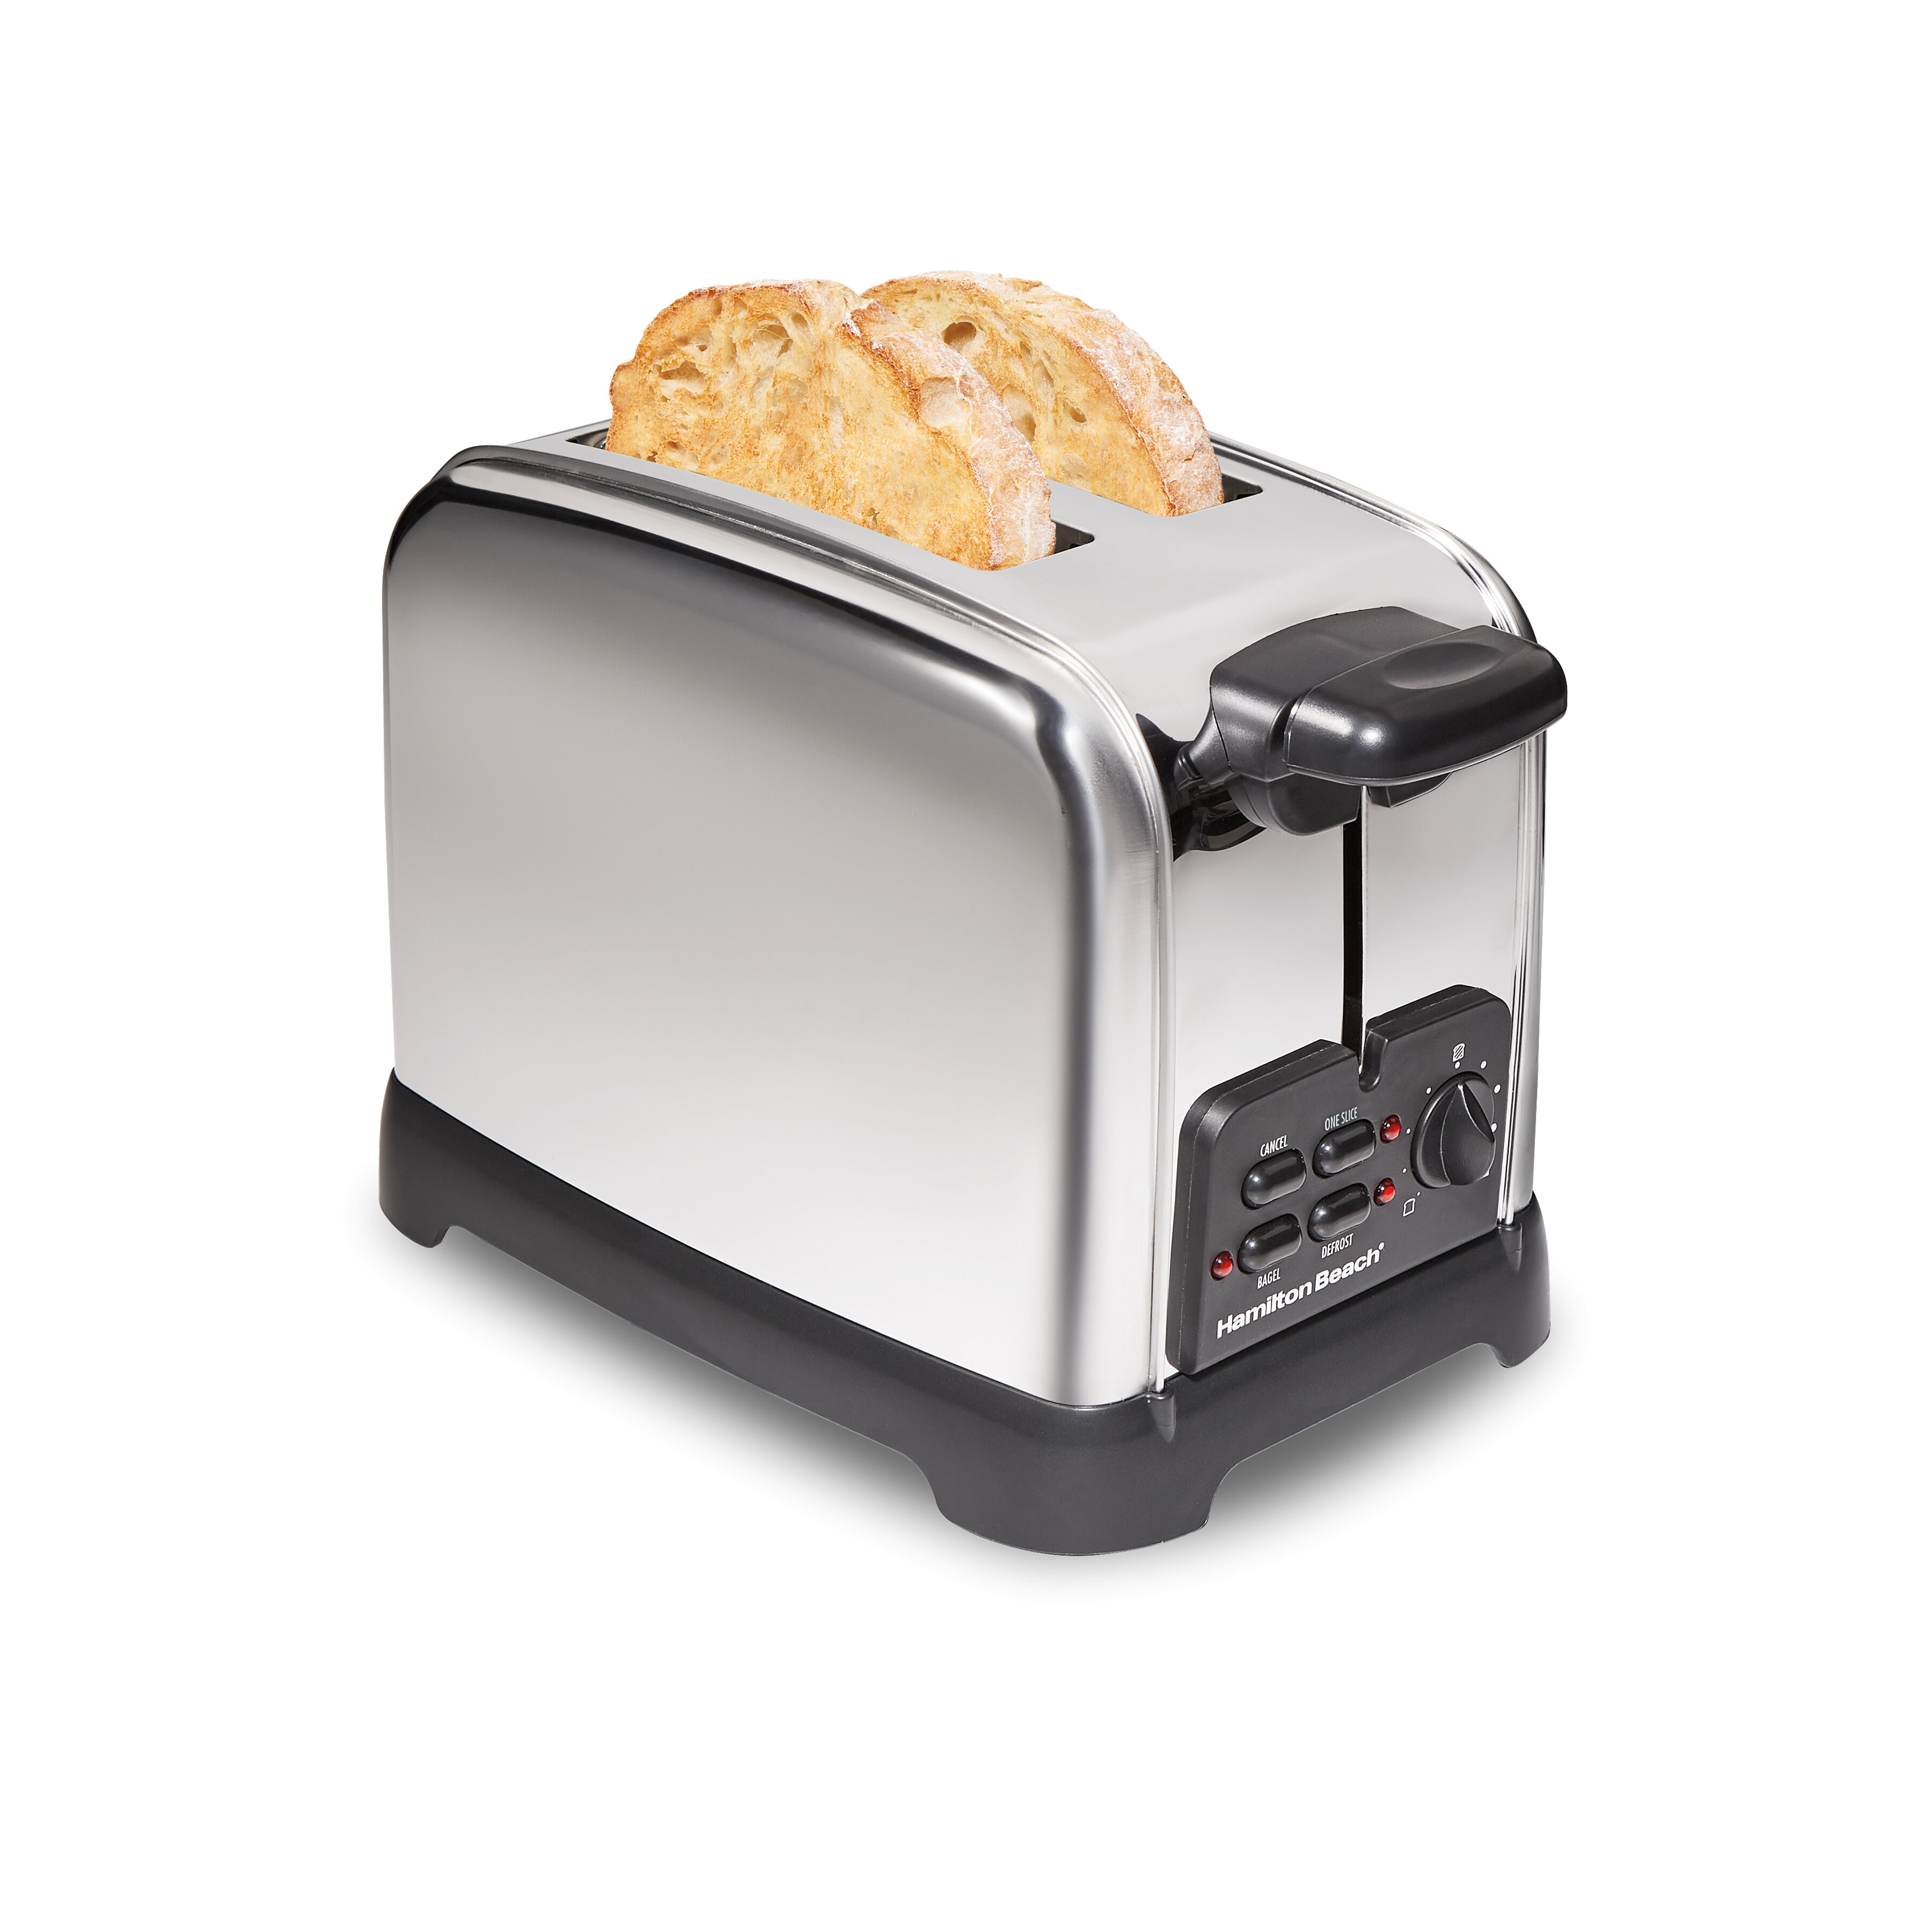 Ninja Foodi 2-in-1 Flip Toaster, 2-slice Toaster, Compact Toaster